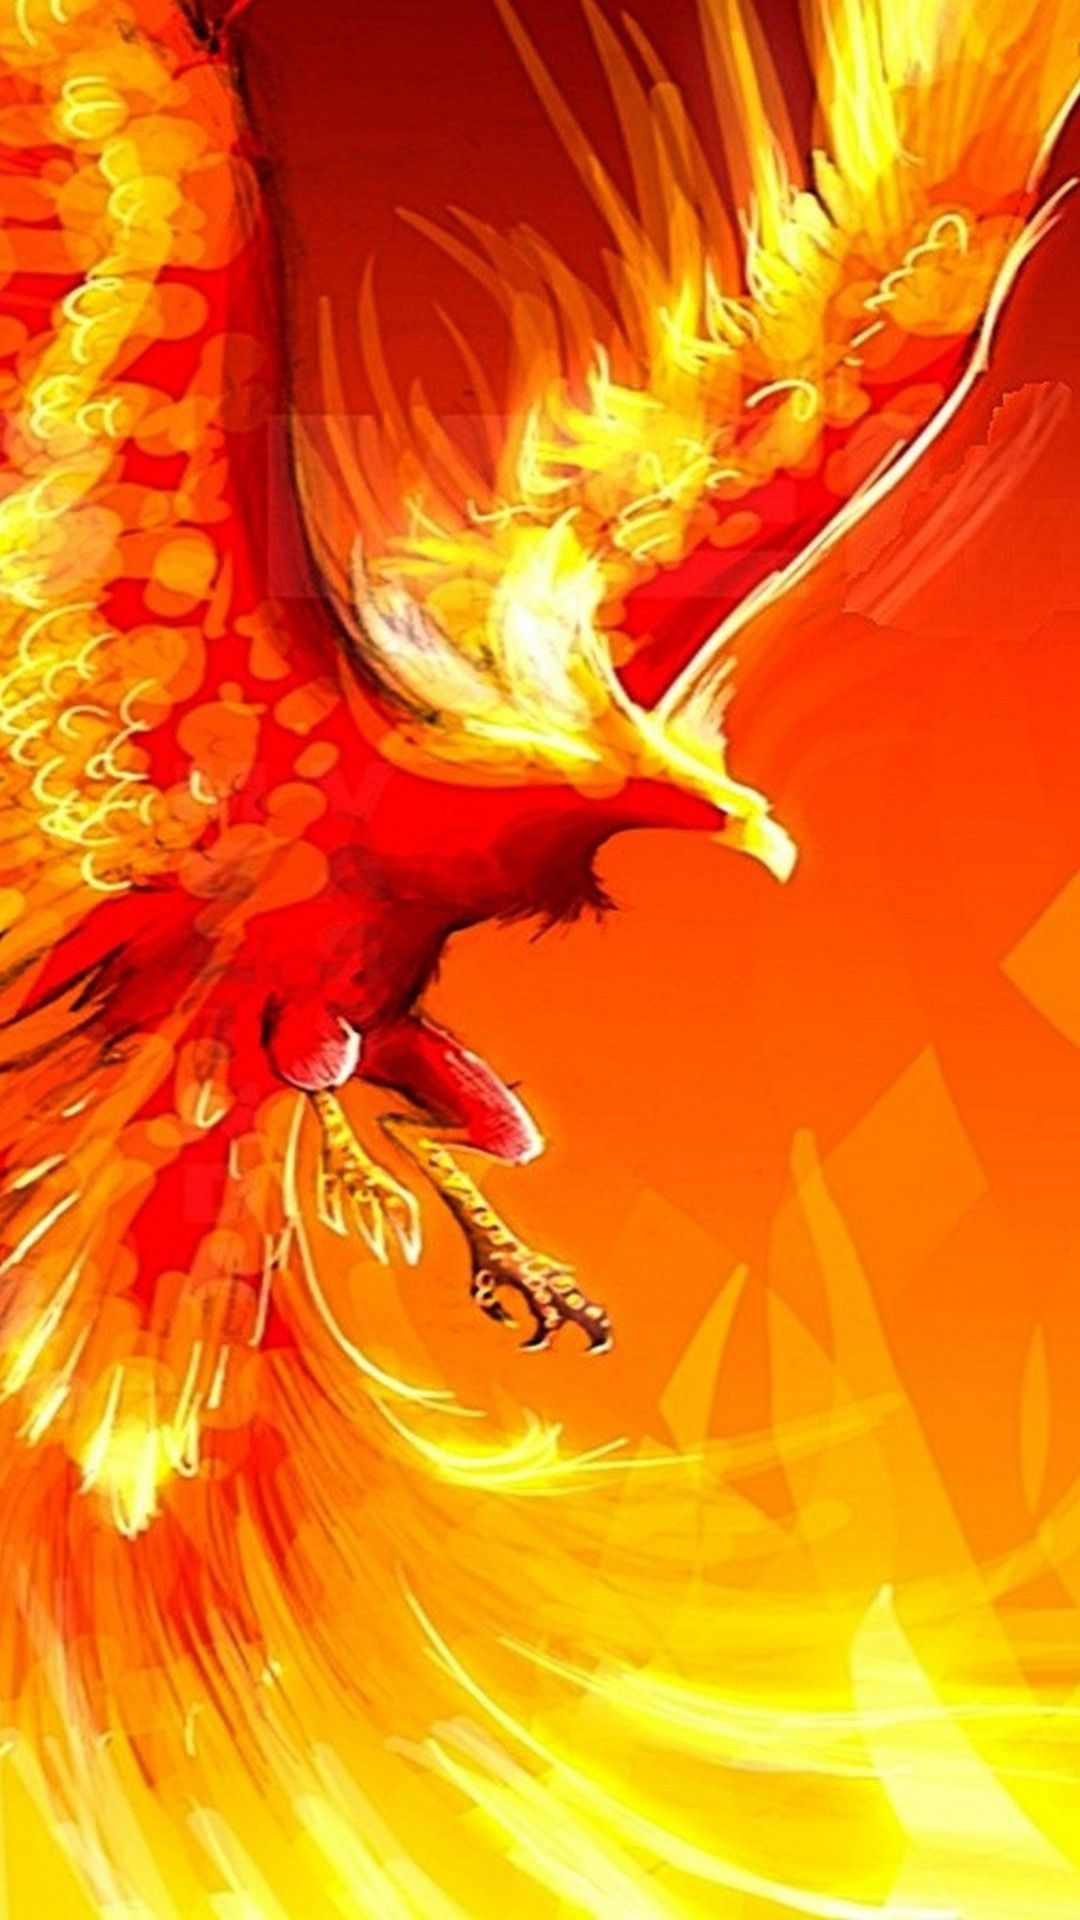 Powerful Epic Legendary Phoenix Spreading Glowing Wing in Universe  Spiritual Animal Awakening ConceptMagical Fantasy Epic Wallpaper  Generative AI Stock Illustration  Adobe Stock